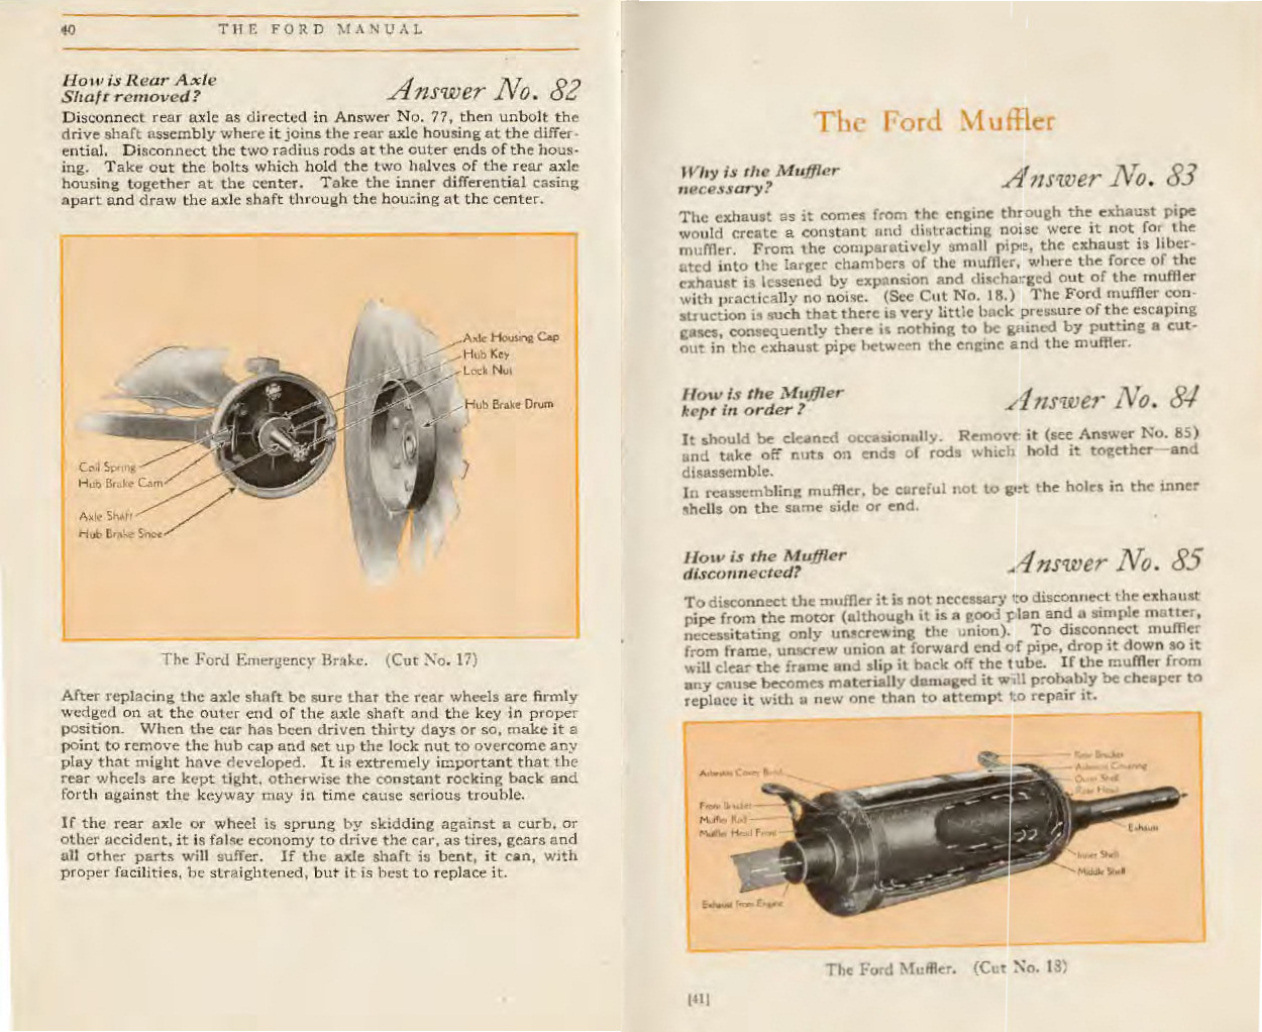 n_1919 Ford Manual-40-41.jpg